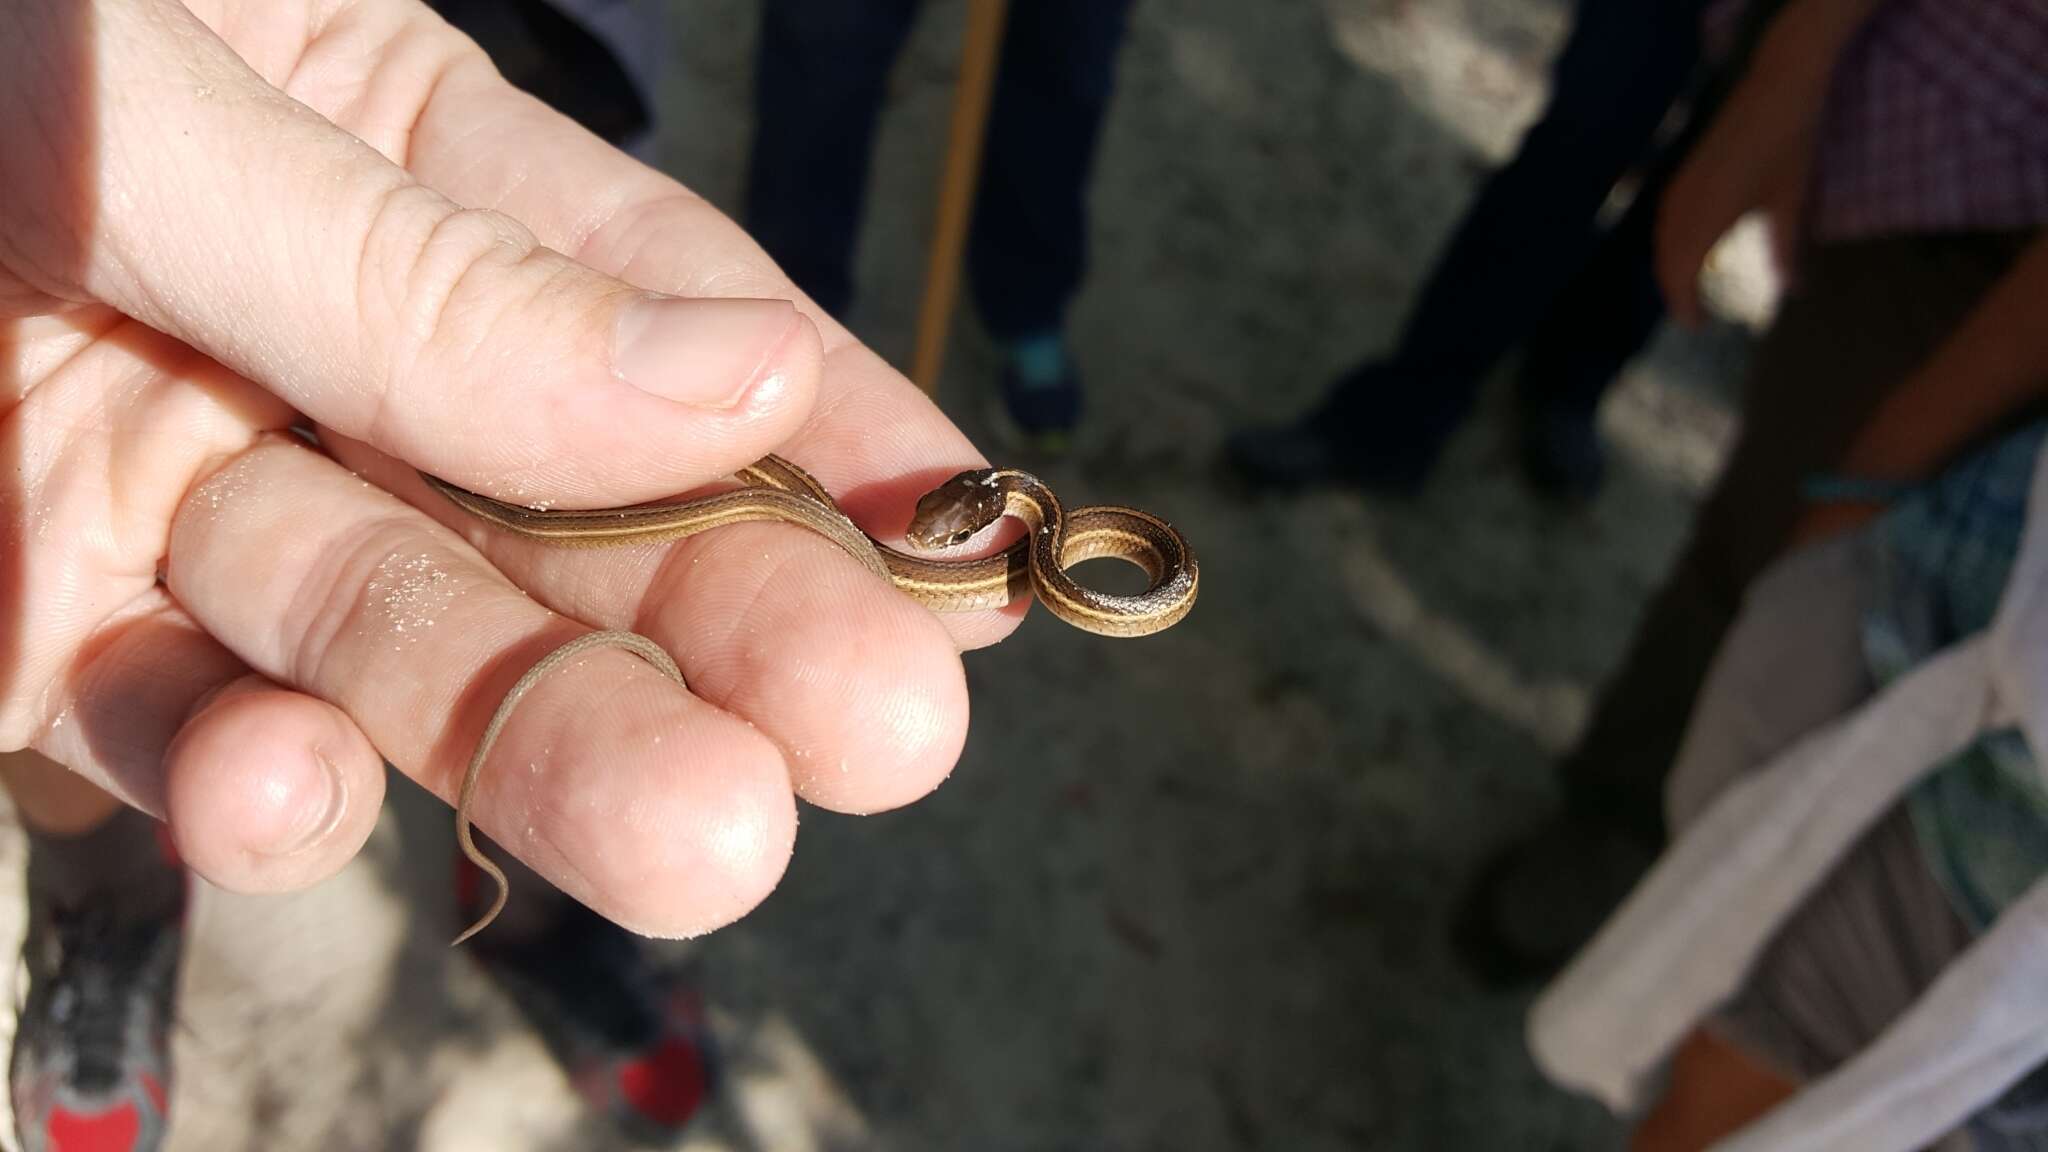 Image of Eastern Ribbon Snake